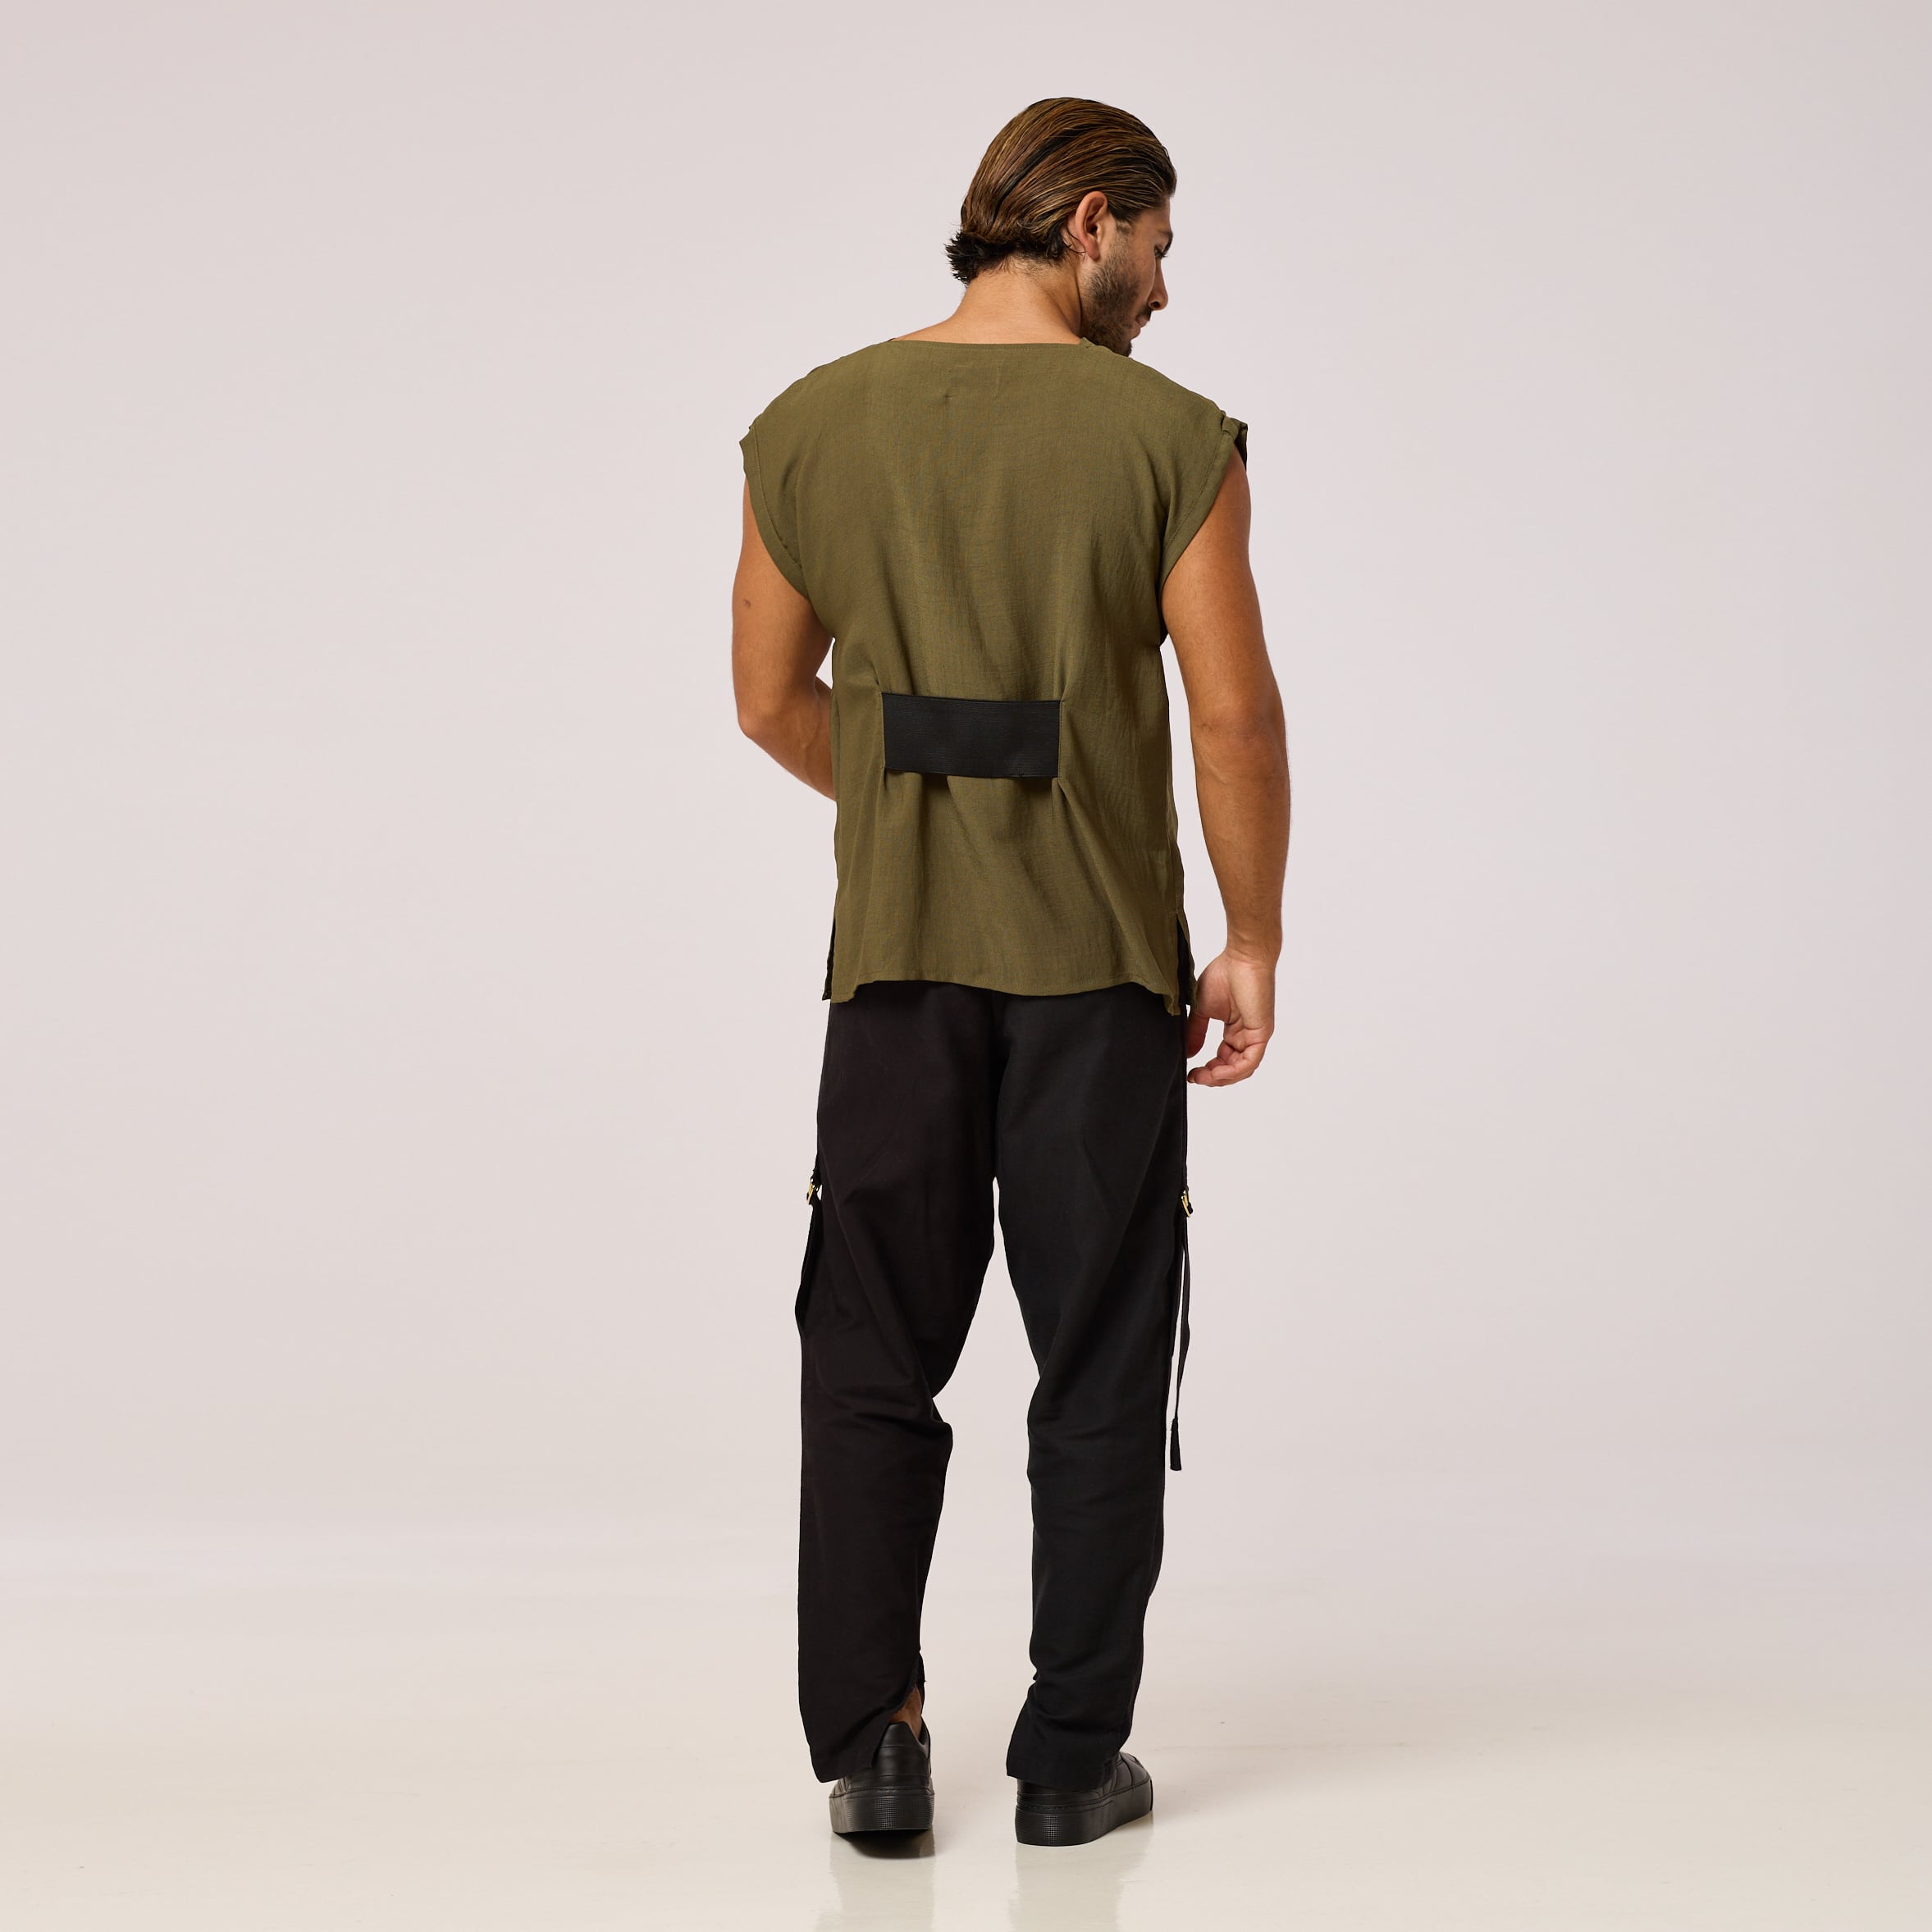   ZERØ London - Back view, olive green mens zero waste vest designed & made in London